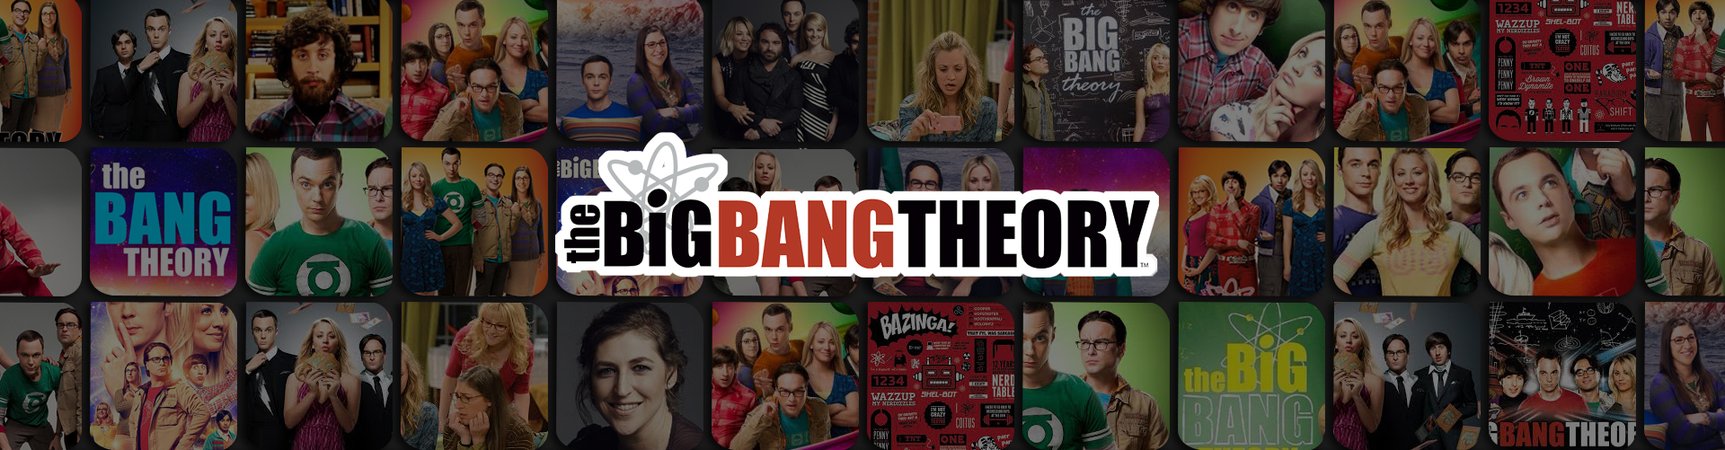 The Big Bang Theory Notebooks